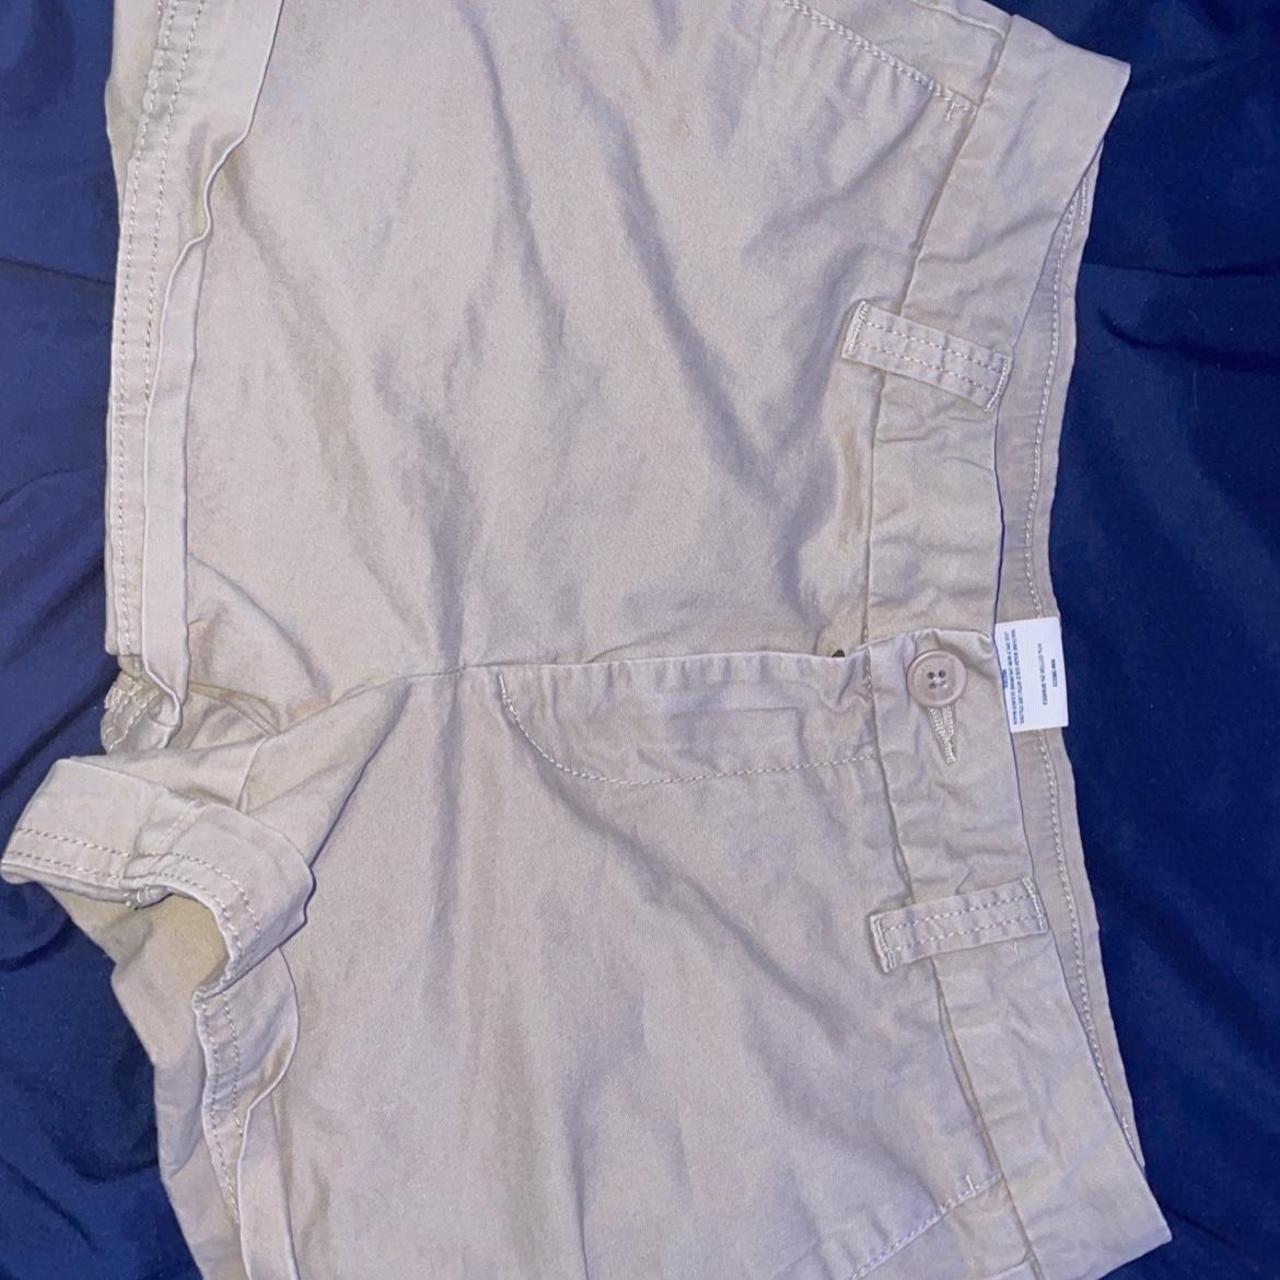 Magellan size 4 low rise outdoor shorts - Depop